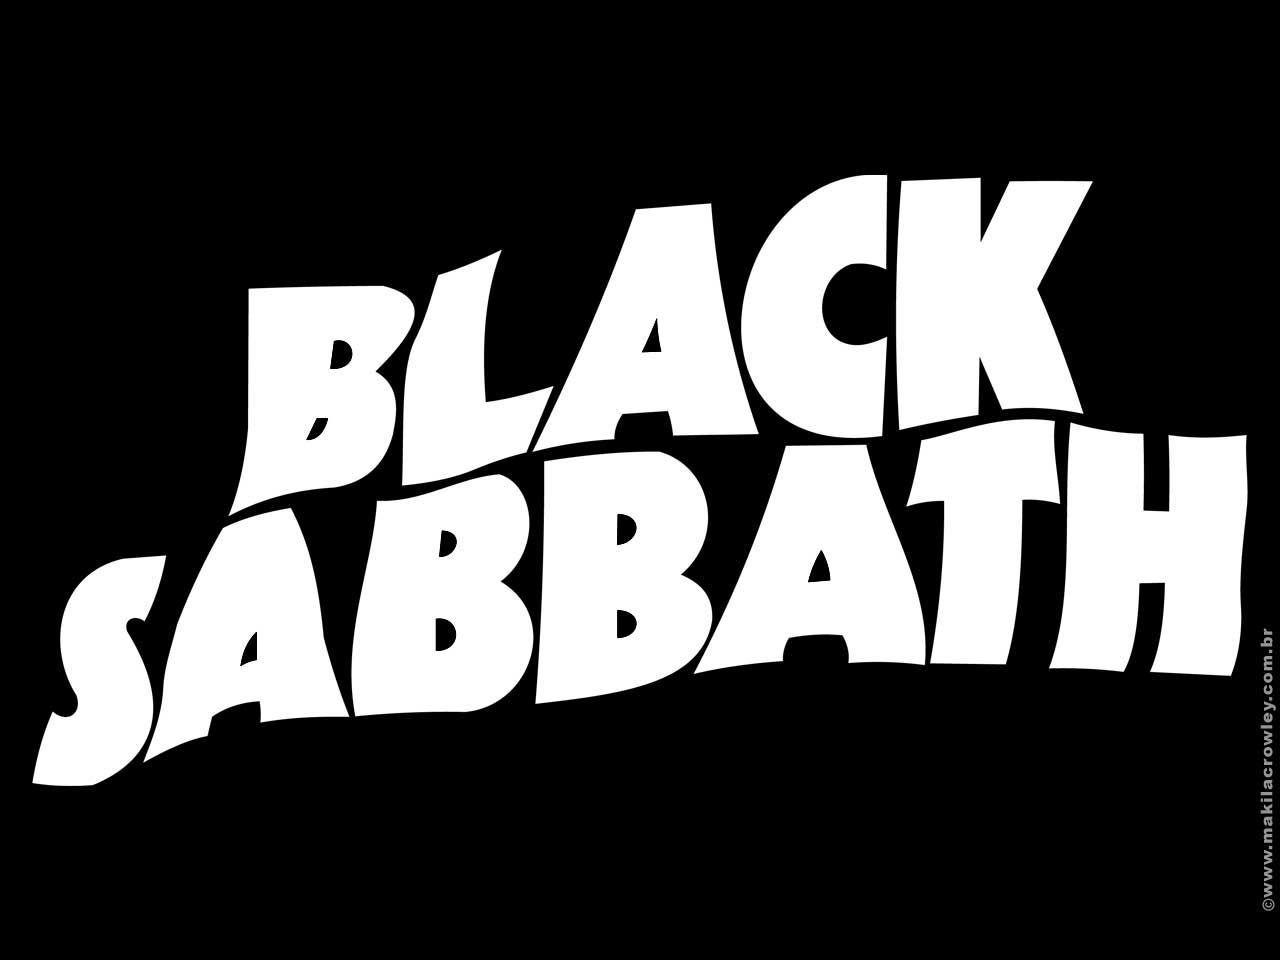 Black Sabbath Wallpaper Fanclubs 1280x1024PX Wallpaper Black